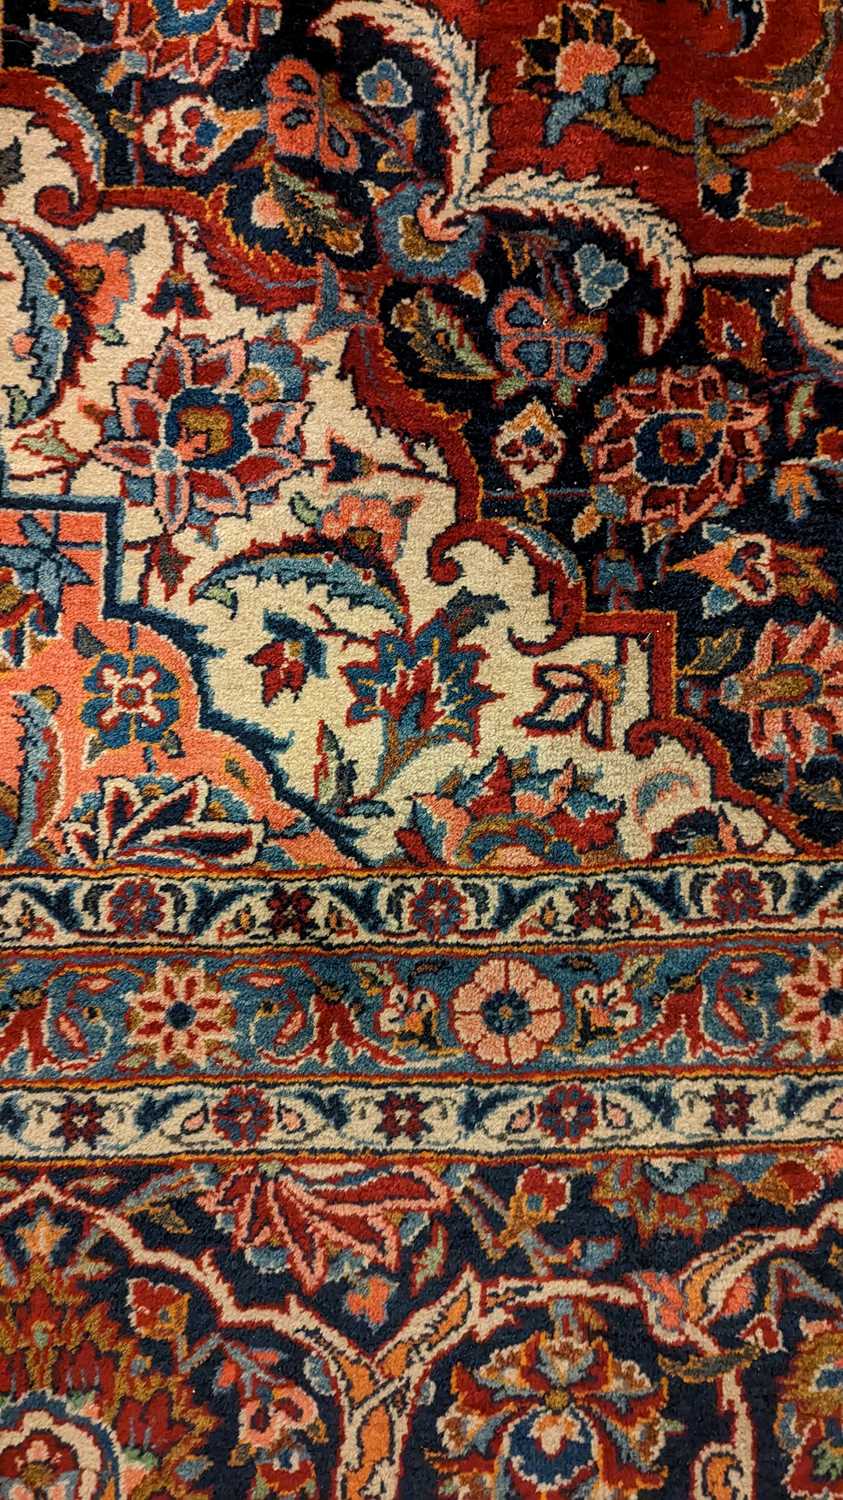 A Kashan carpet - Image 10 of 22